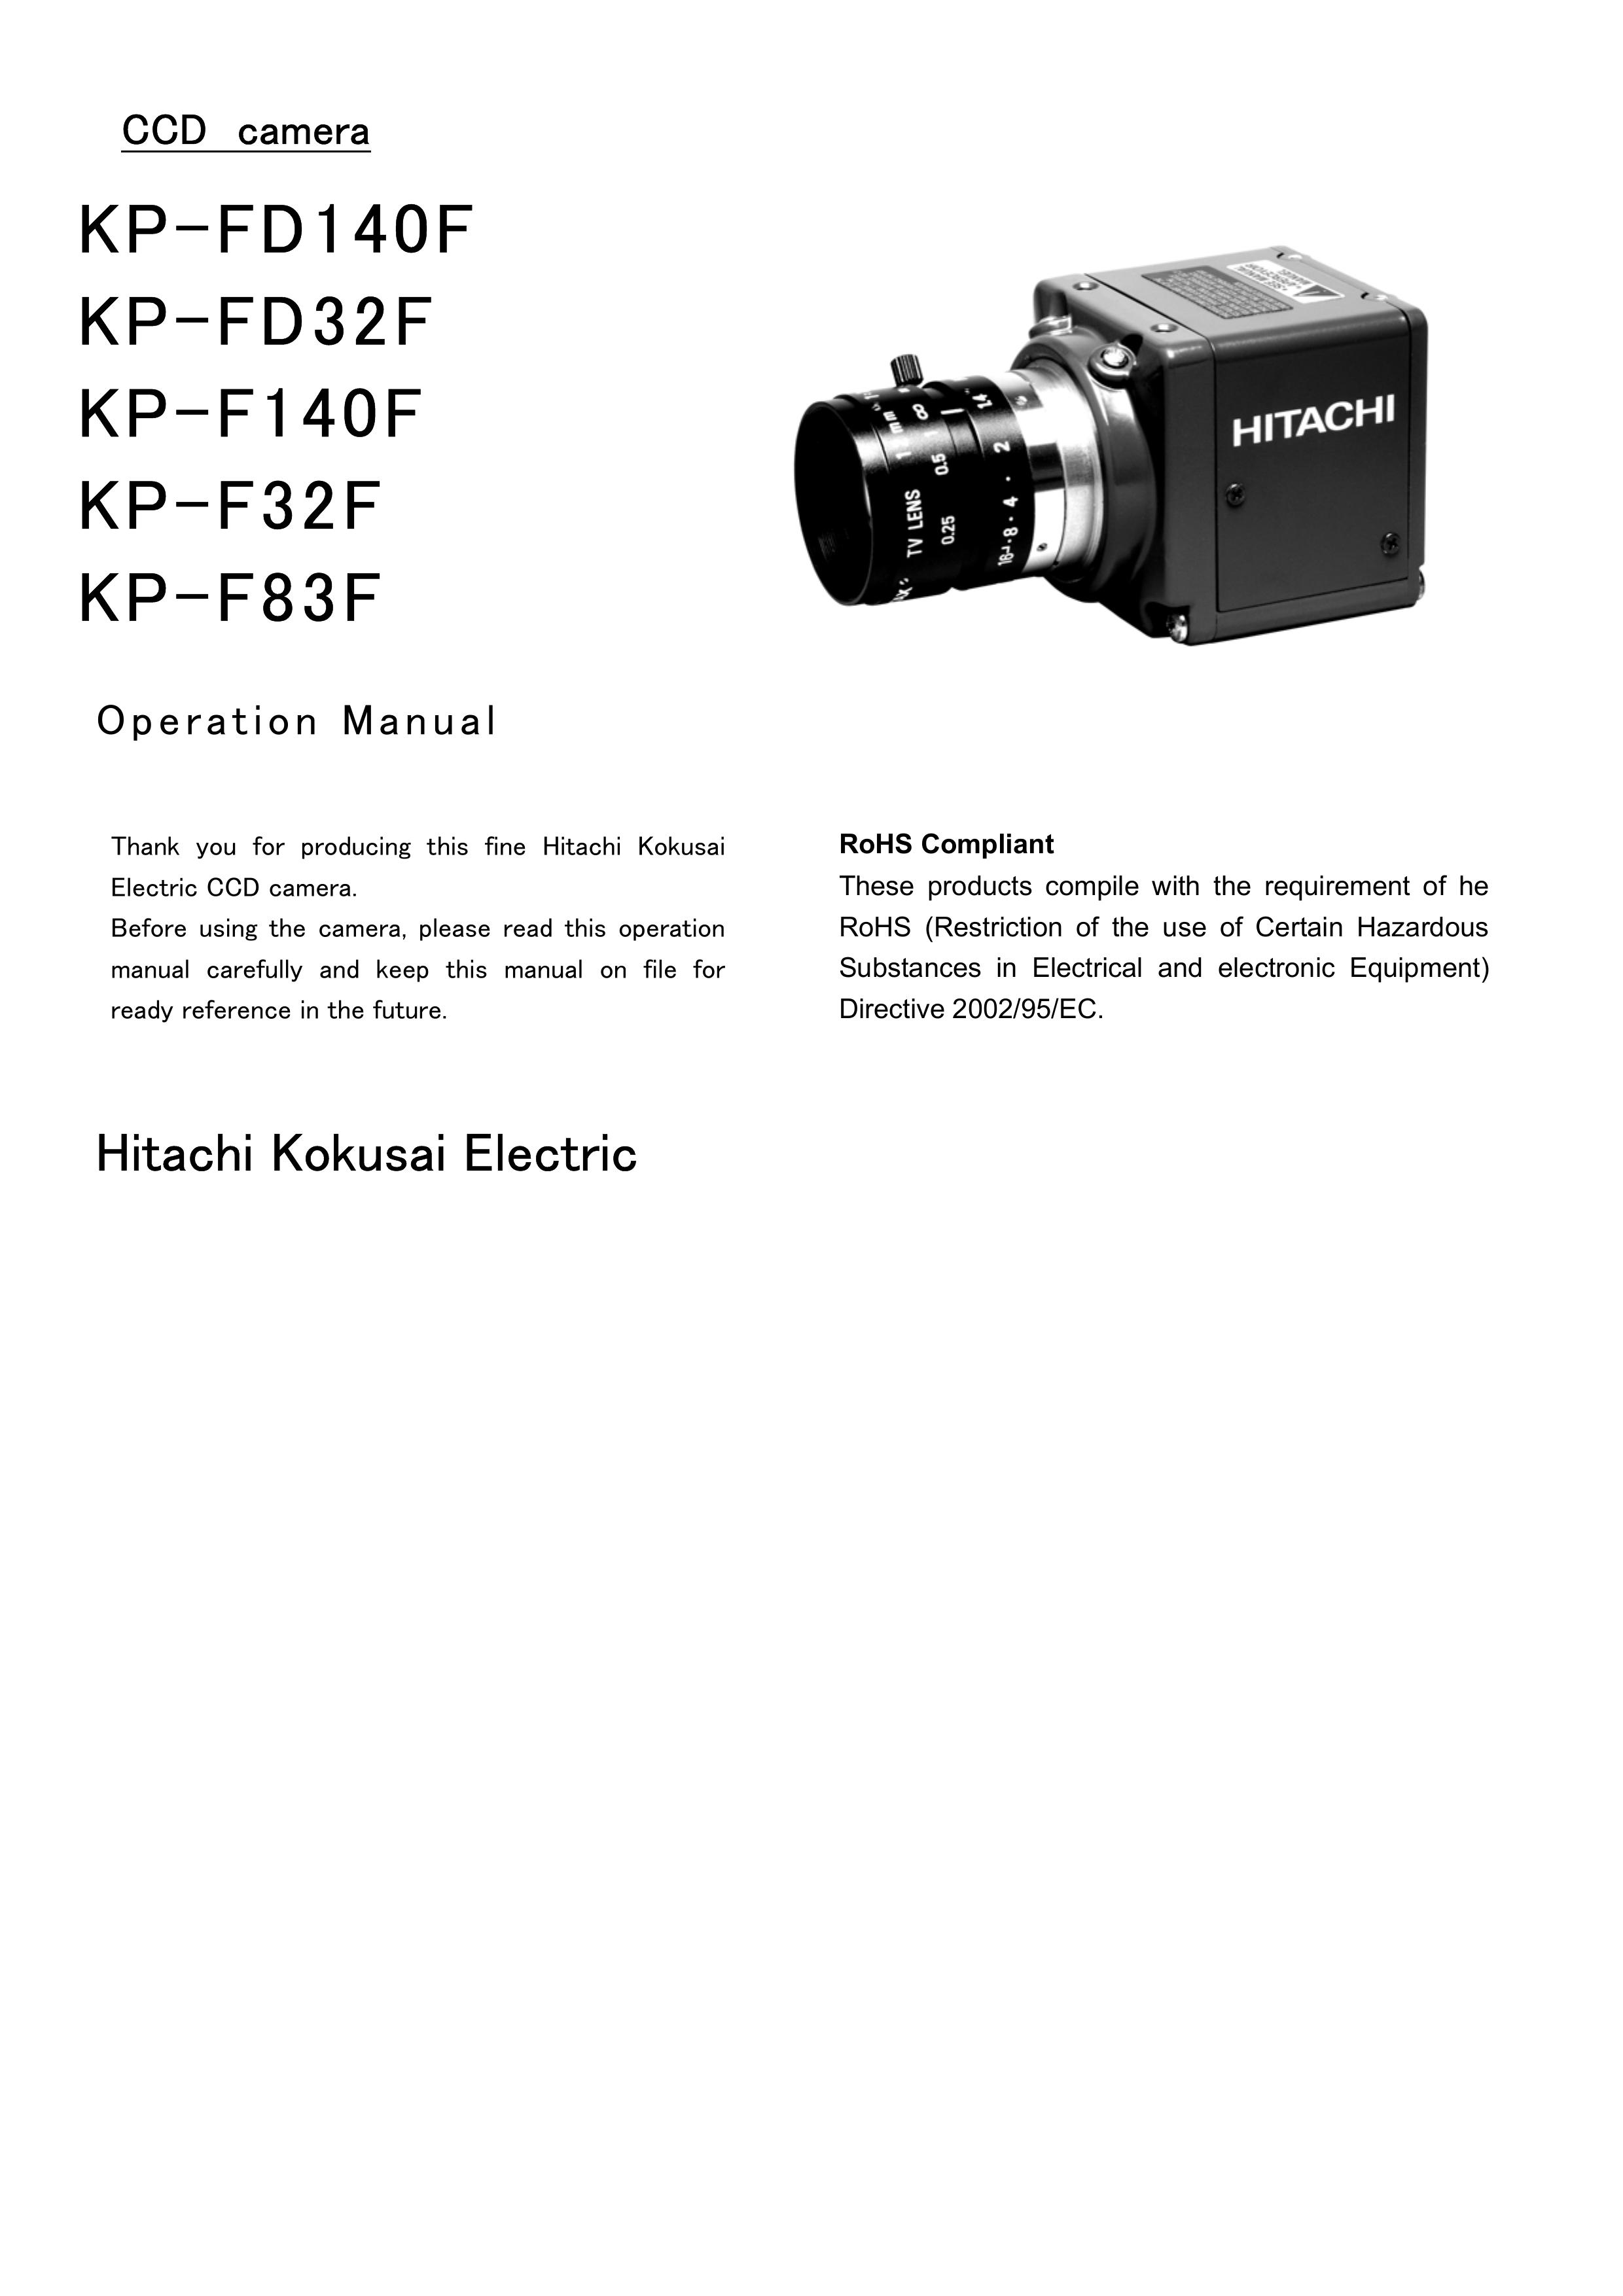 Hitachi KP-F83F Digital Camera User Manual